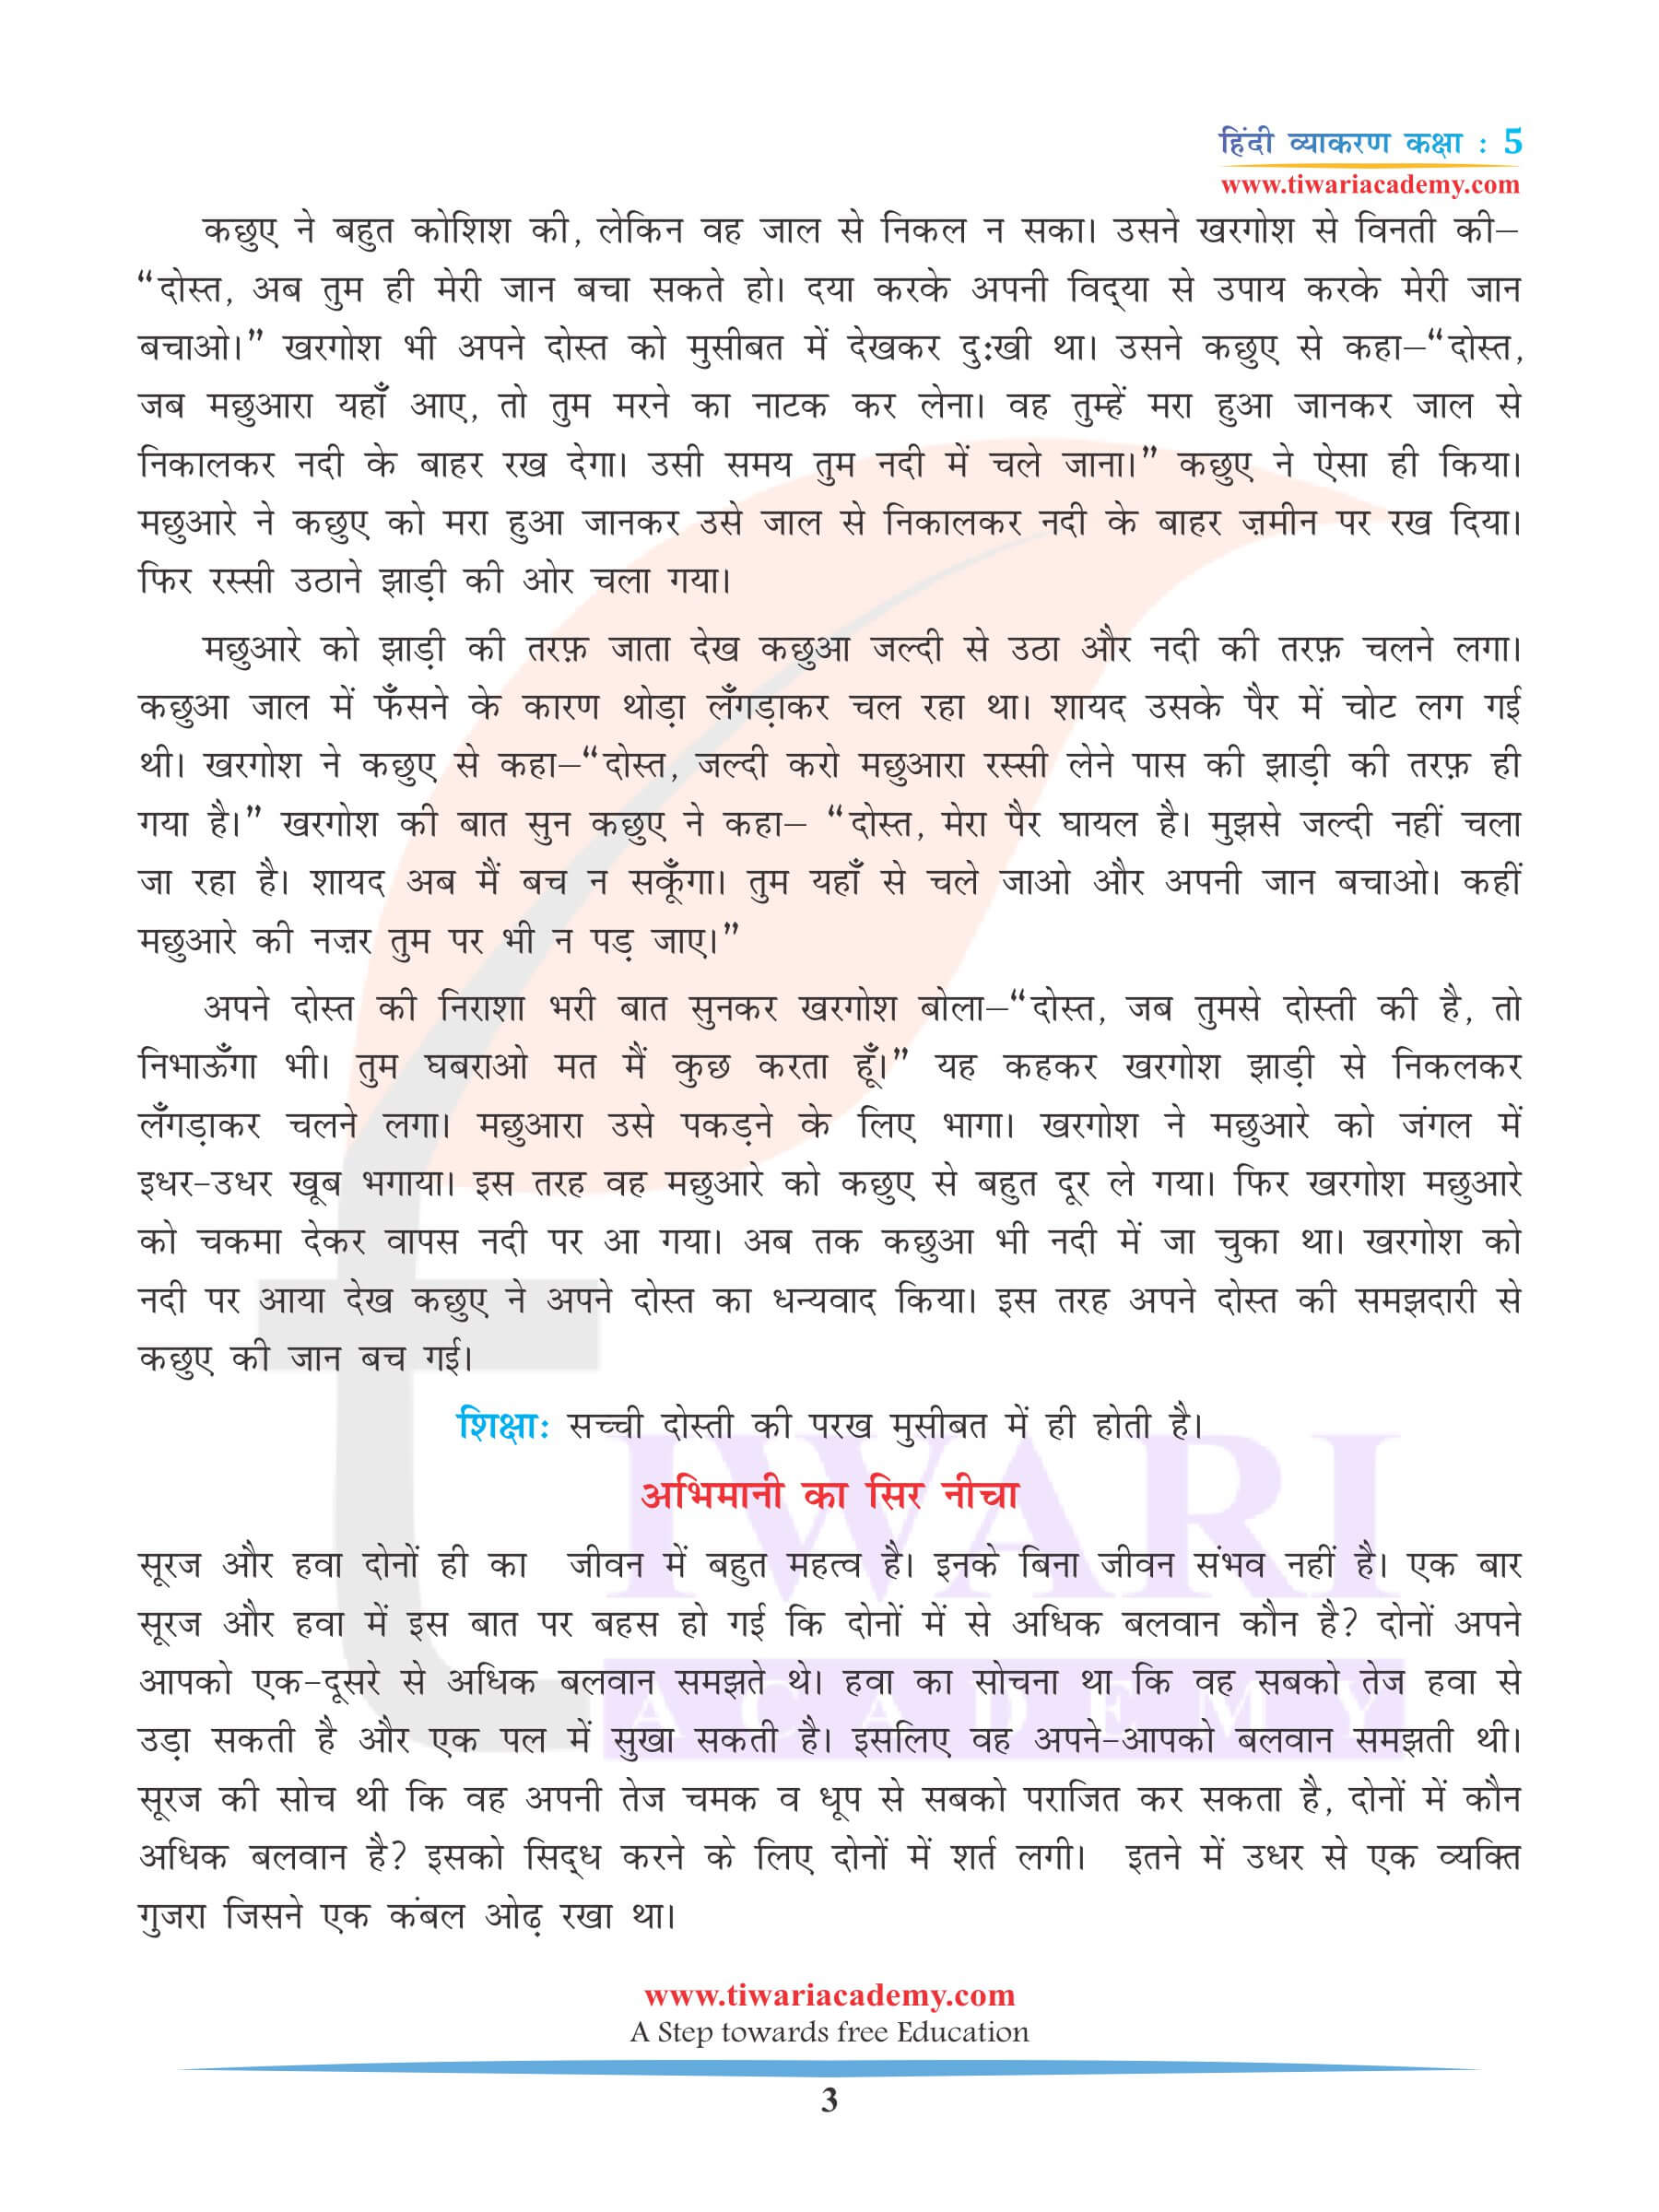 कक्षा 5 हिंदी व्याकरण कहानी लेखन के उदाहरण